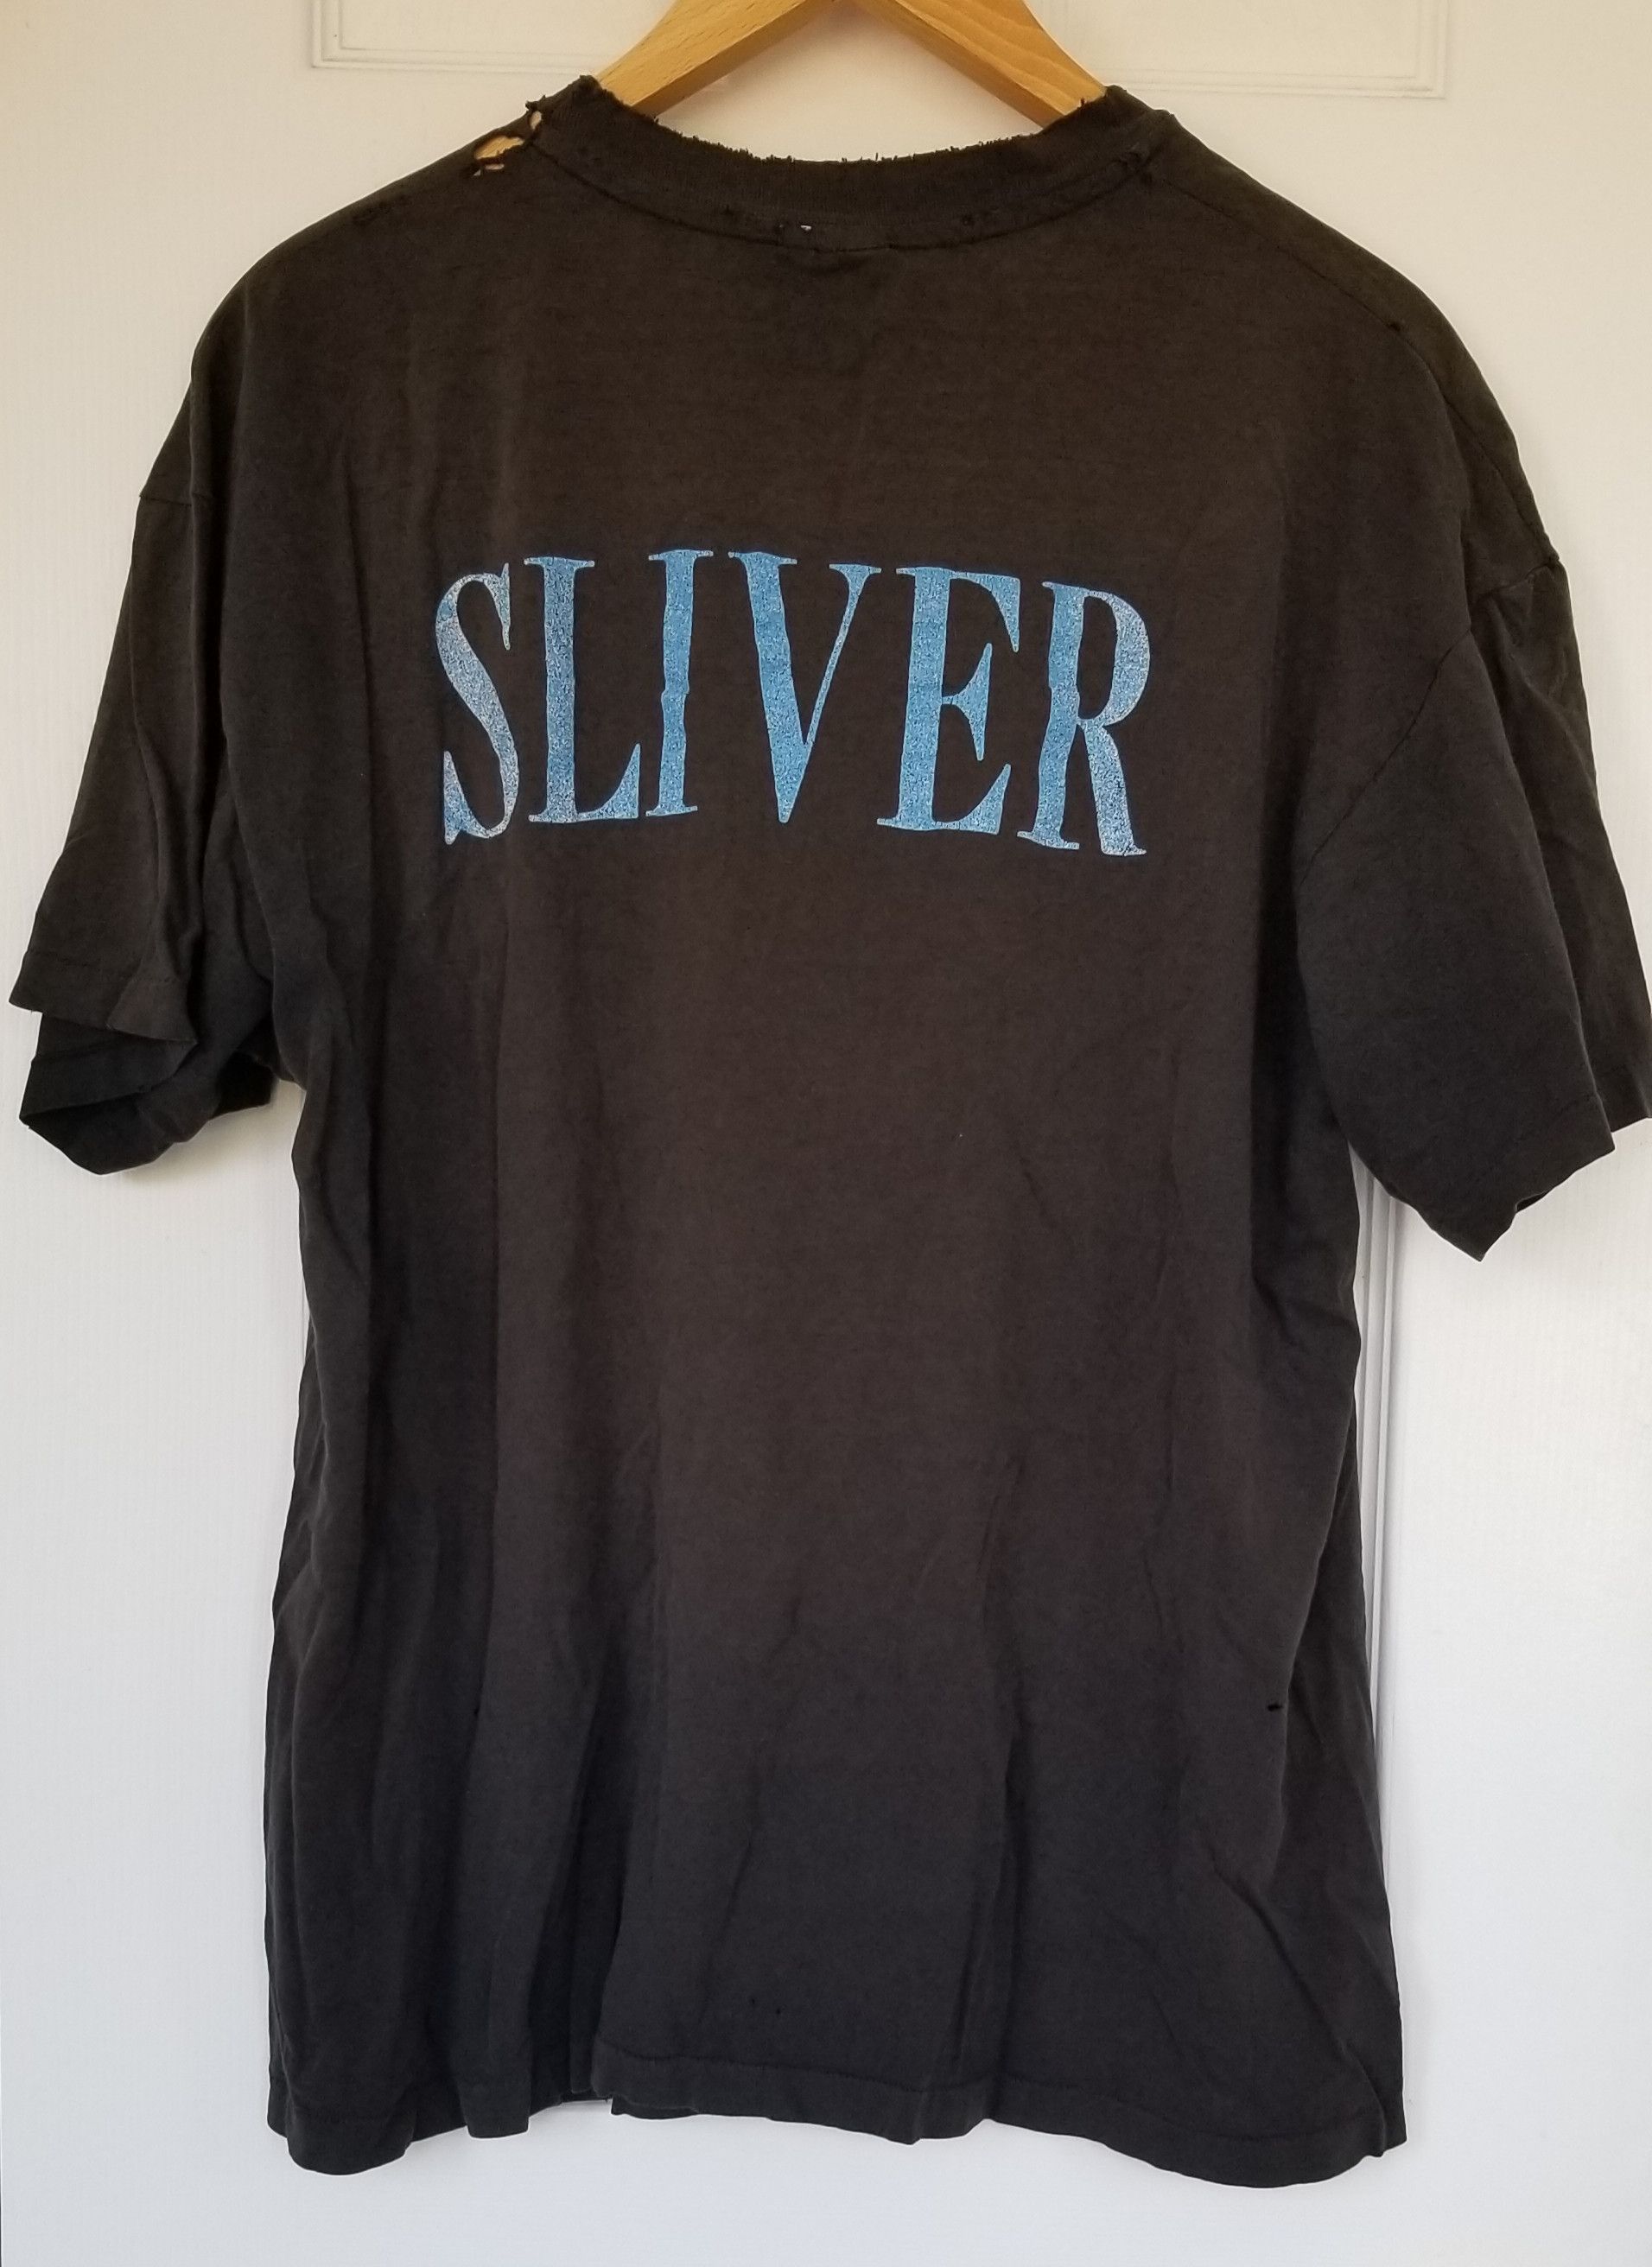 Nirvana Nirvana Sliver Backstage Pass Vintage 90's Band Shirt 